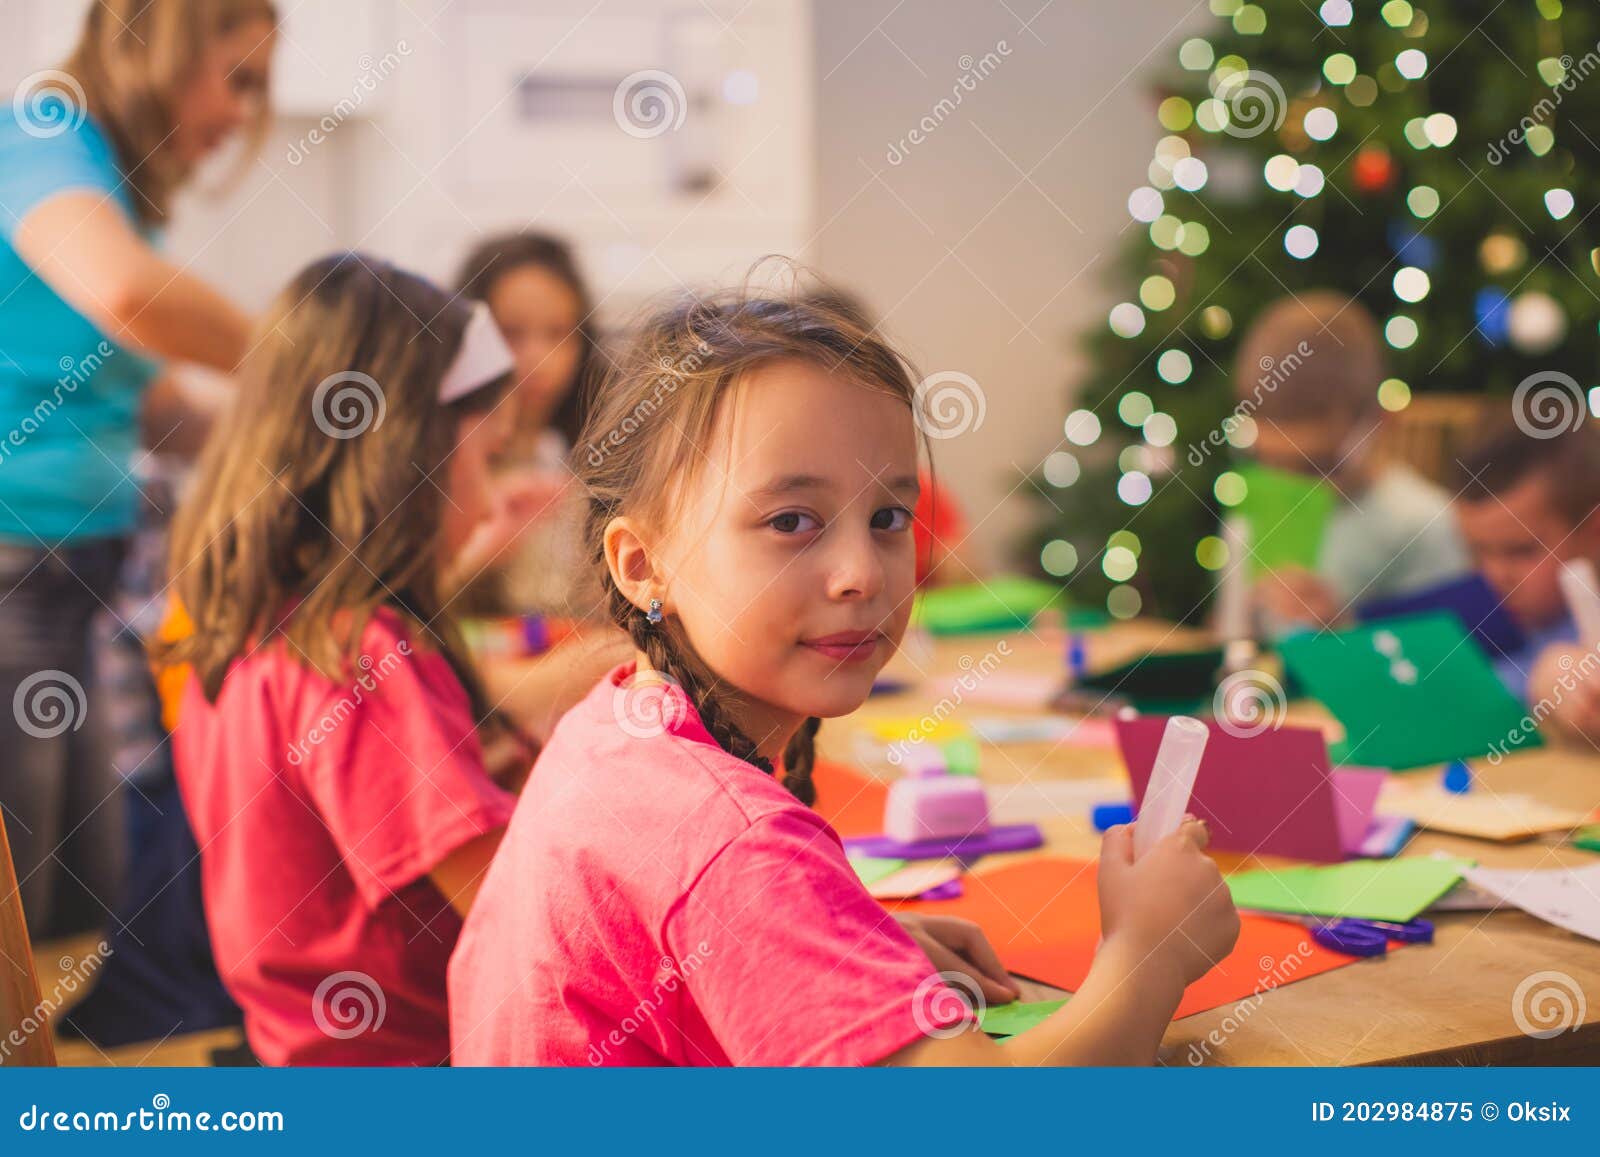 Cheerful Girl while Christmas Workshop among Other Kids Stock Image ...